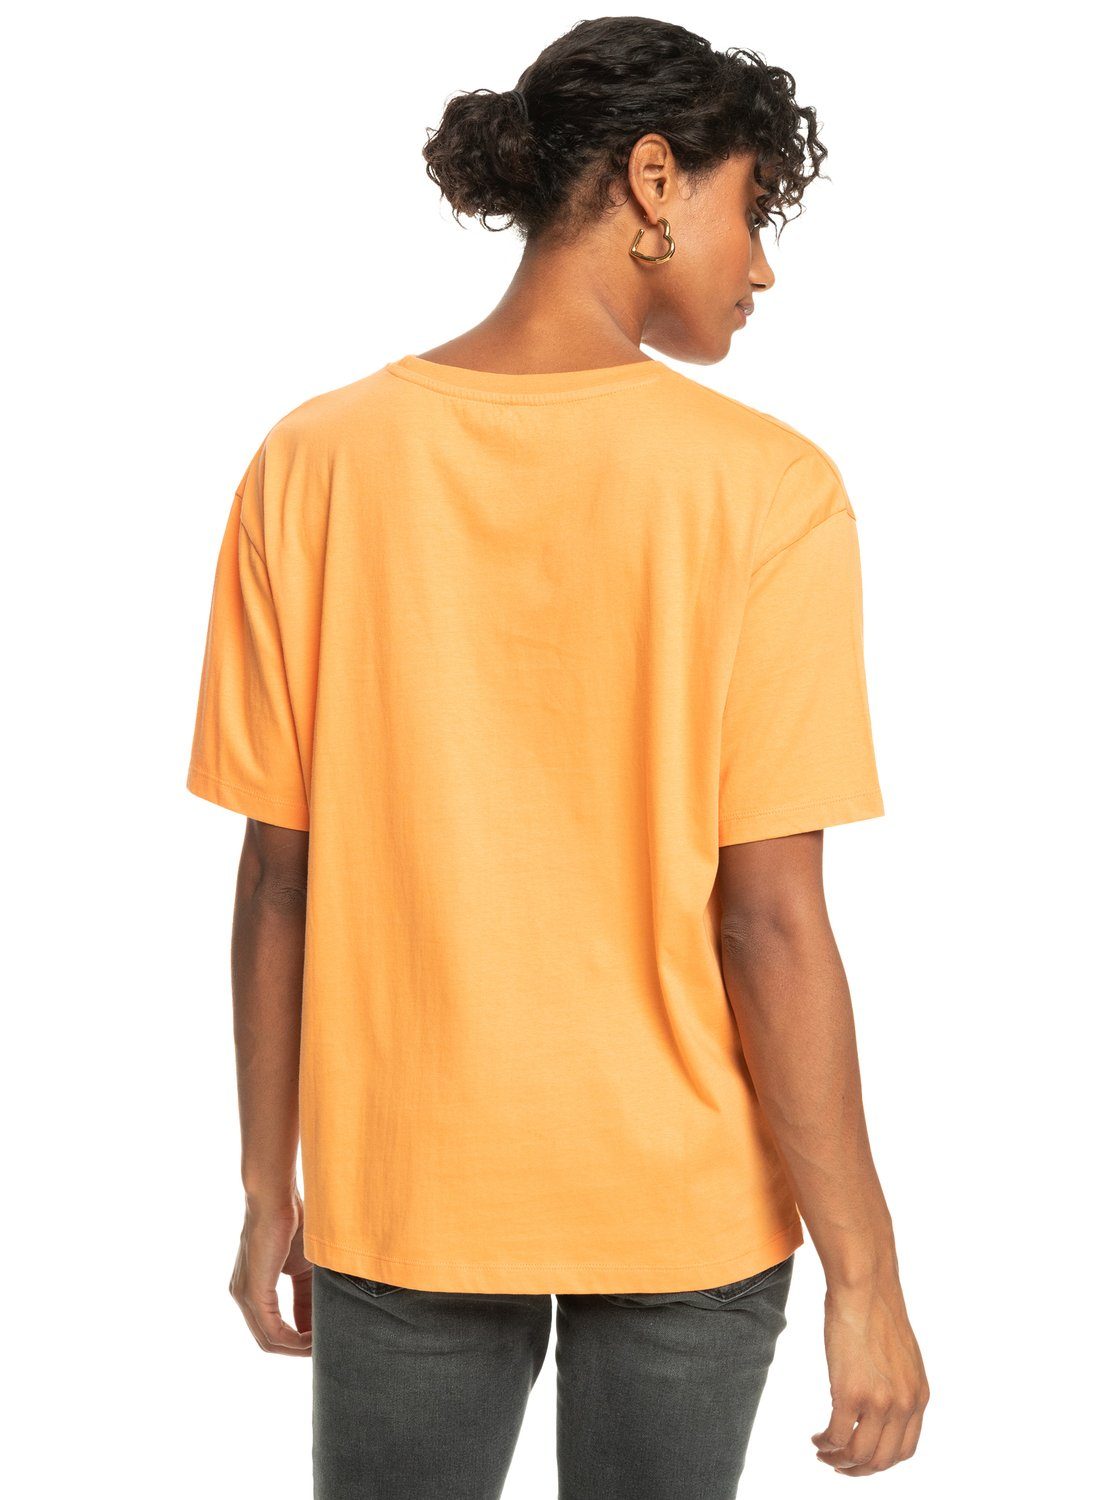 Sky Under Roxy The T-Shirt Sand Tangerine